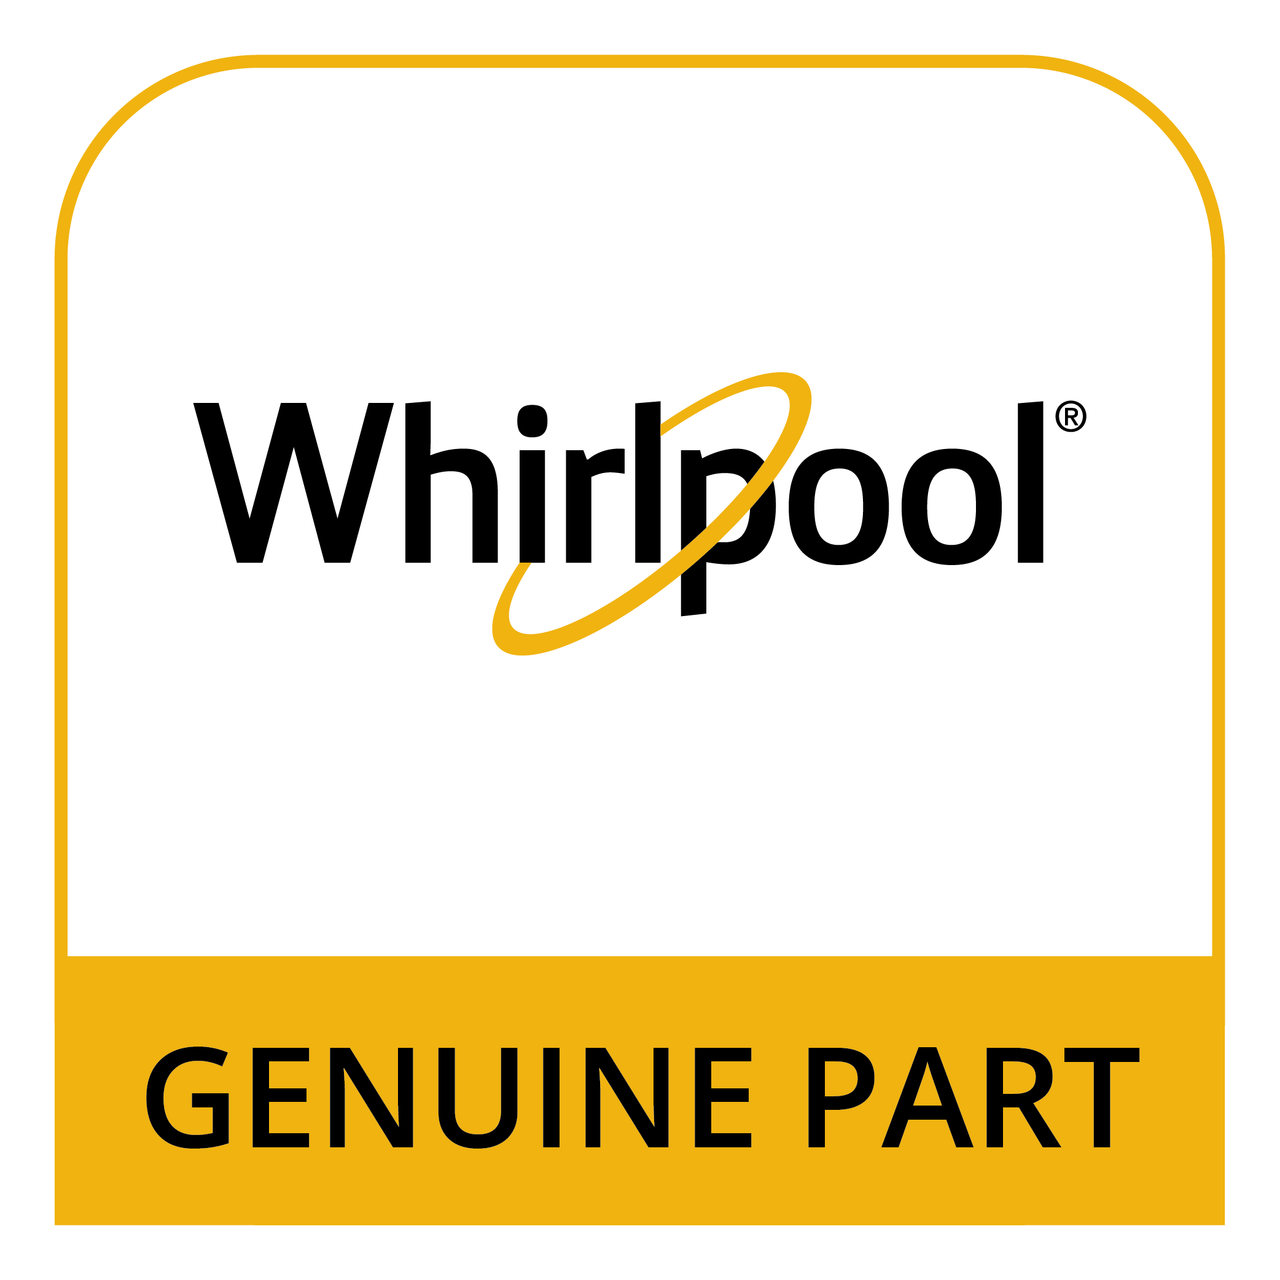 Whirlpool 4396028 - Dryer Vent Kit - Genuine Part